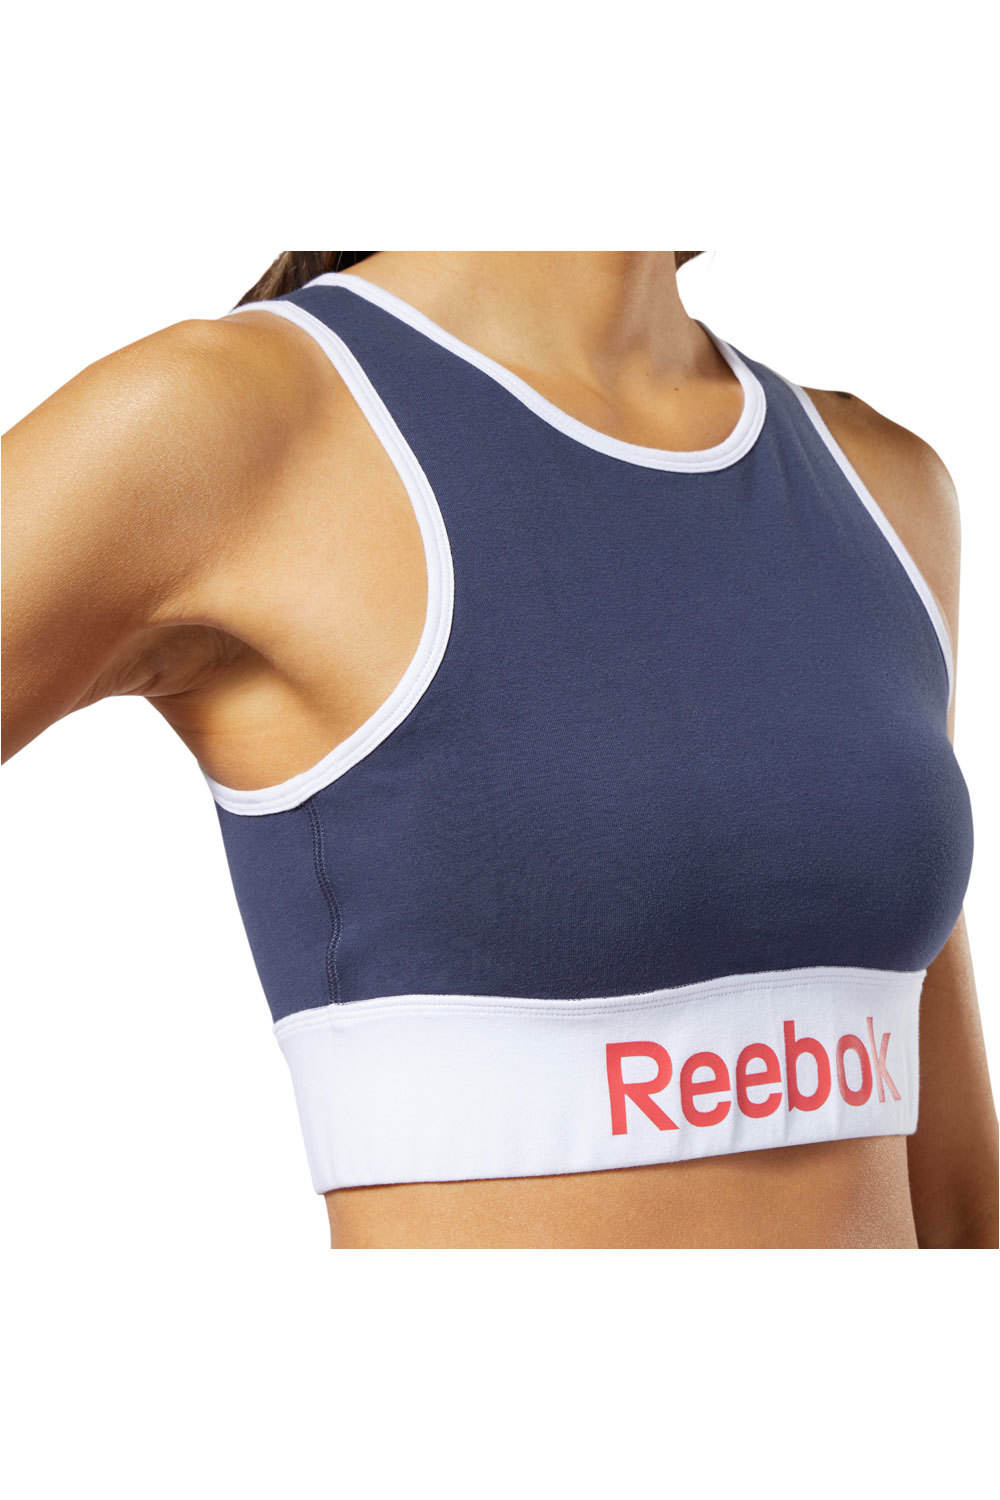 Reebok camiseta tirantes mujer Linear Logo Cotton Bra vista detalle